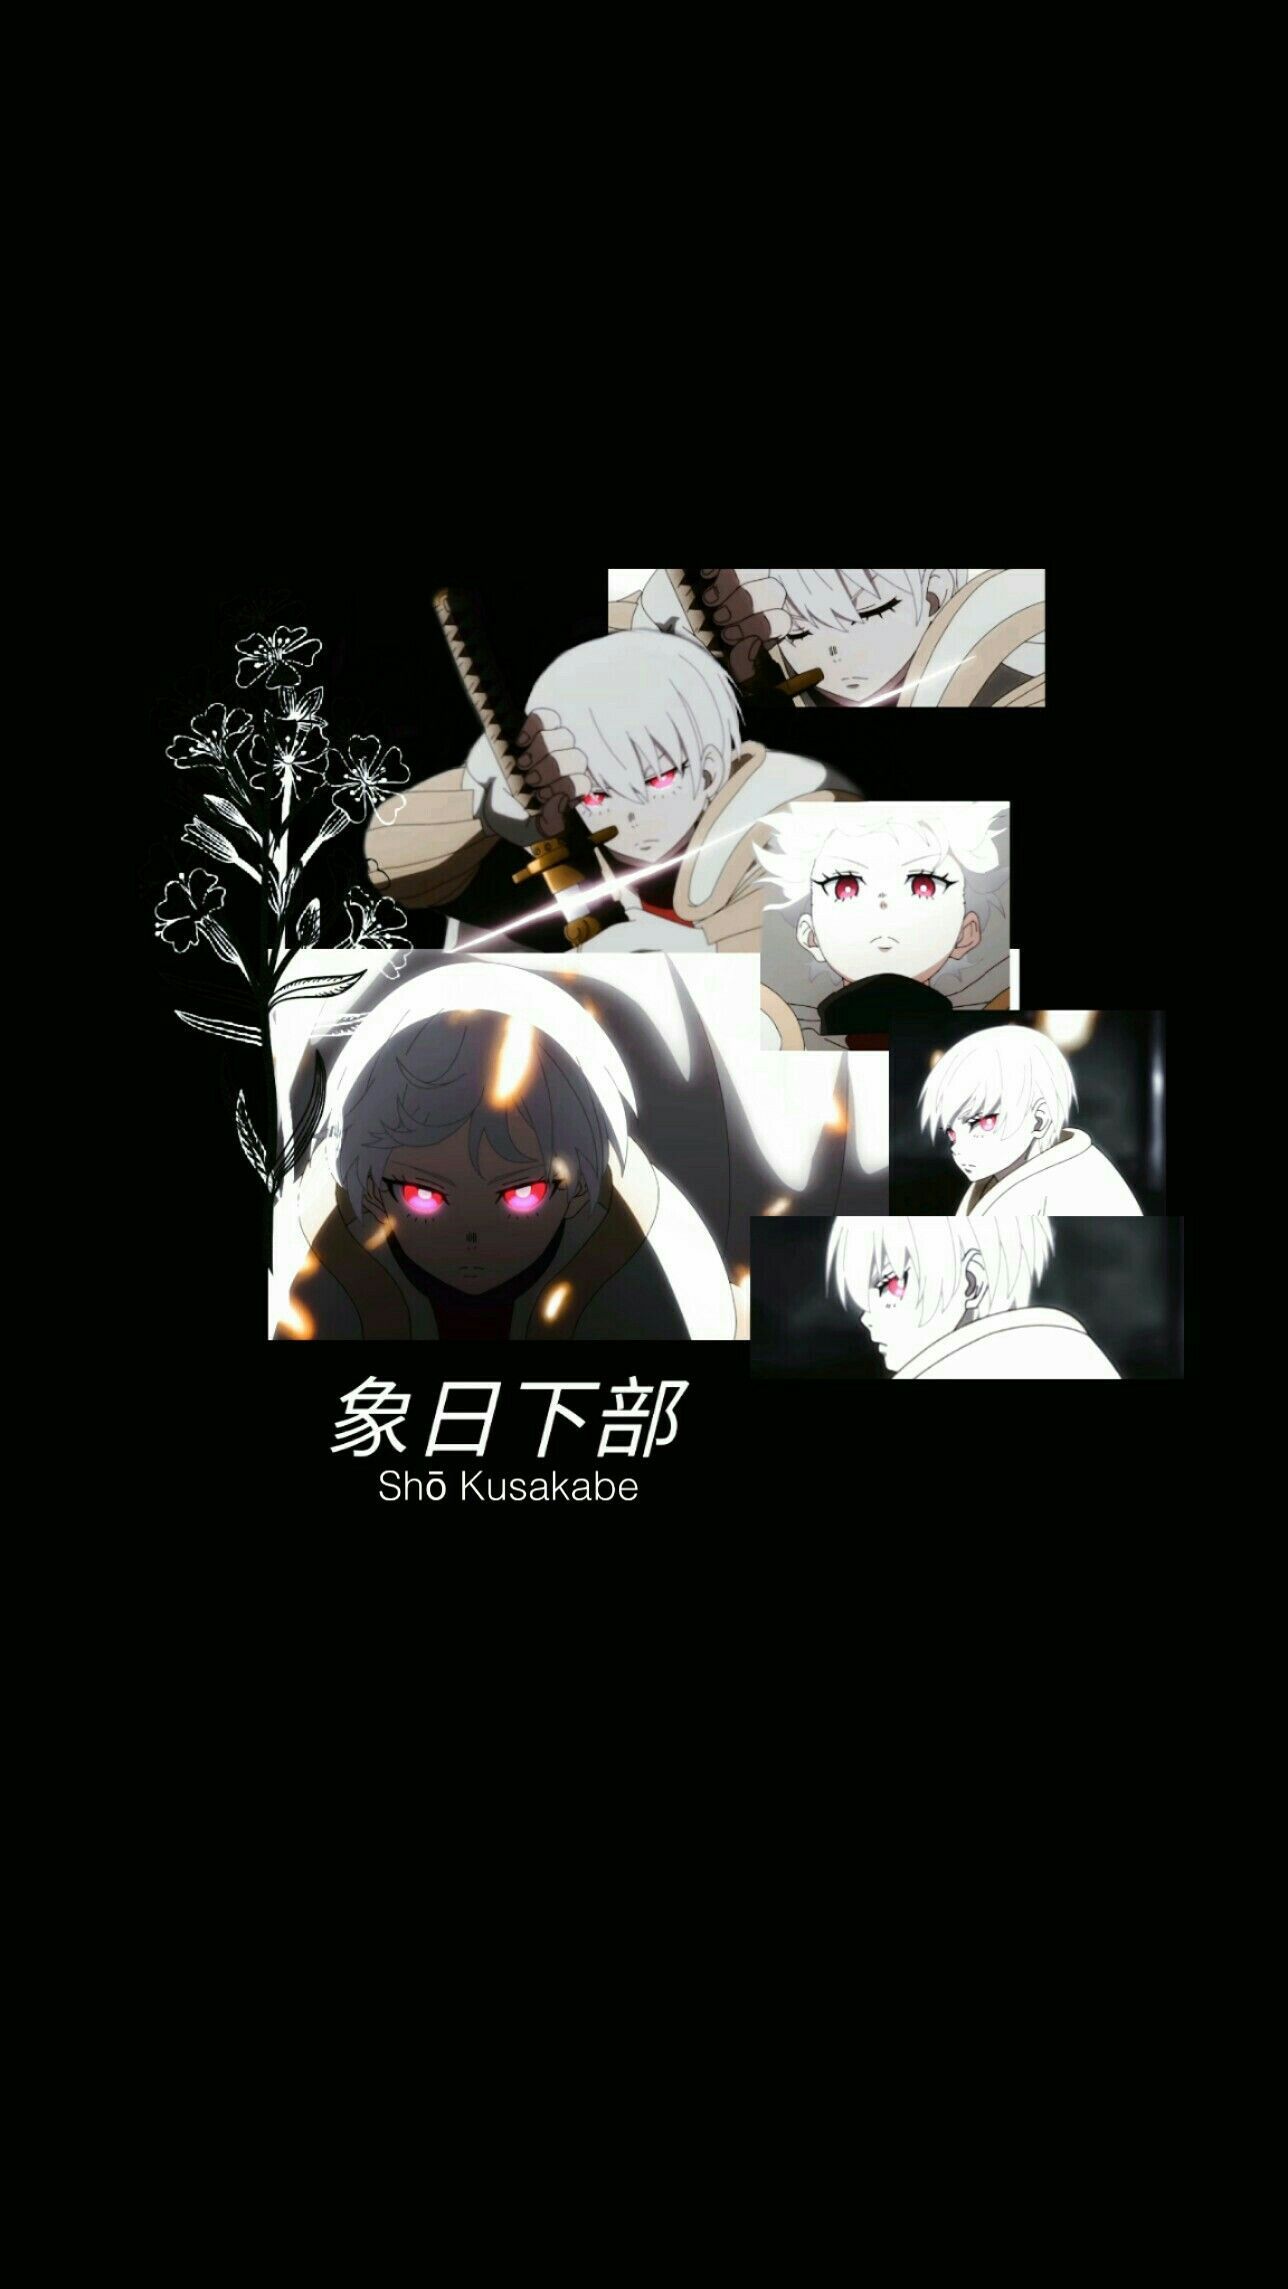 Sho Kusakabe wallpaper icon •. Enen Shoubotai (fire force). •. Anime elf, Cool anime wallpaper, Anime wallpaper